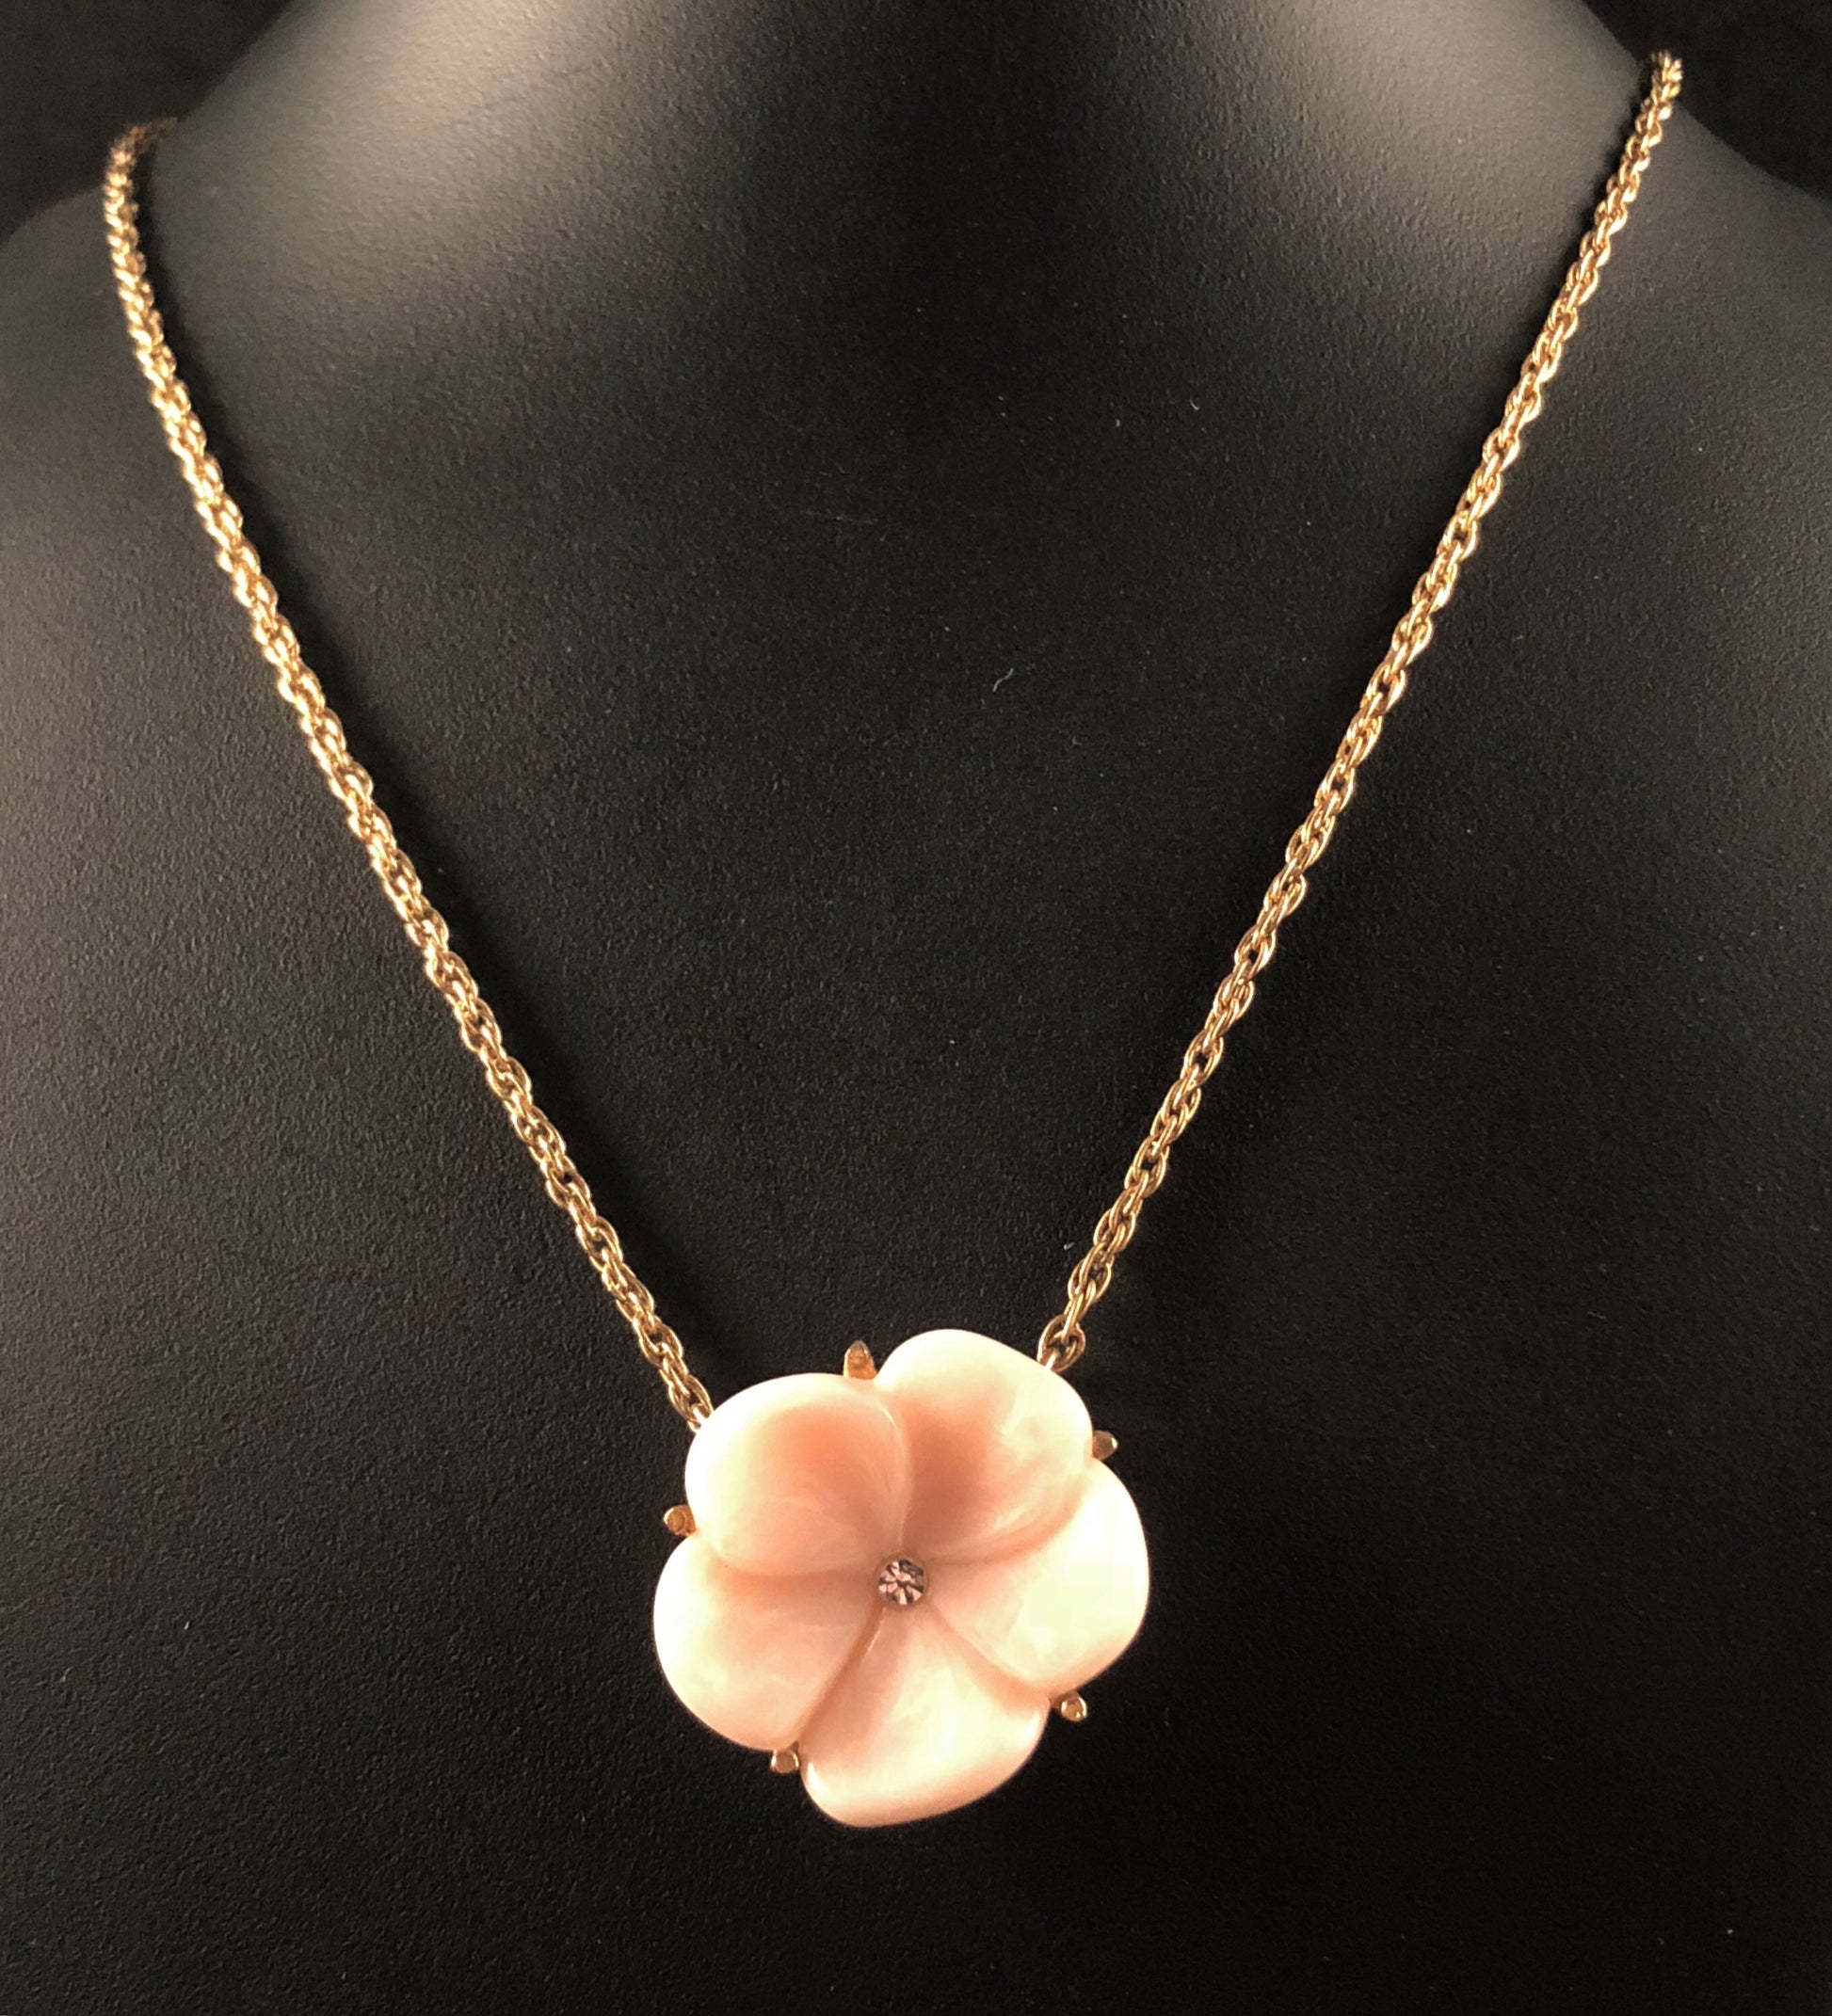 Vintage Avon Silver Tone Necklace With Pink Rhinestone Flower 